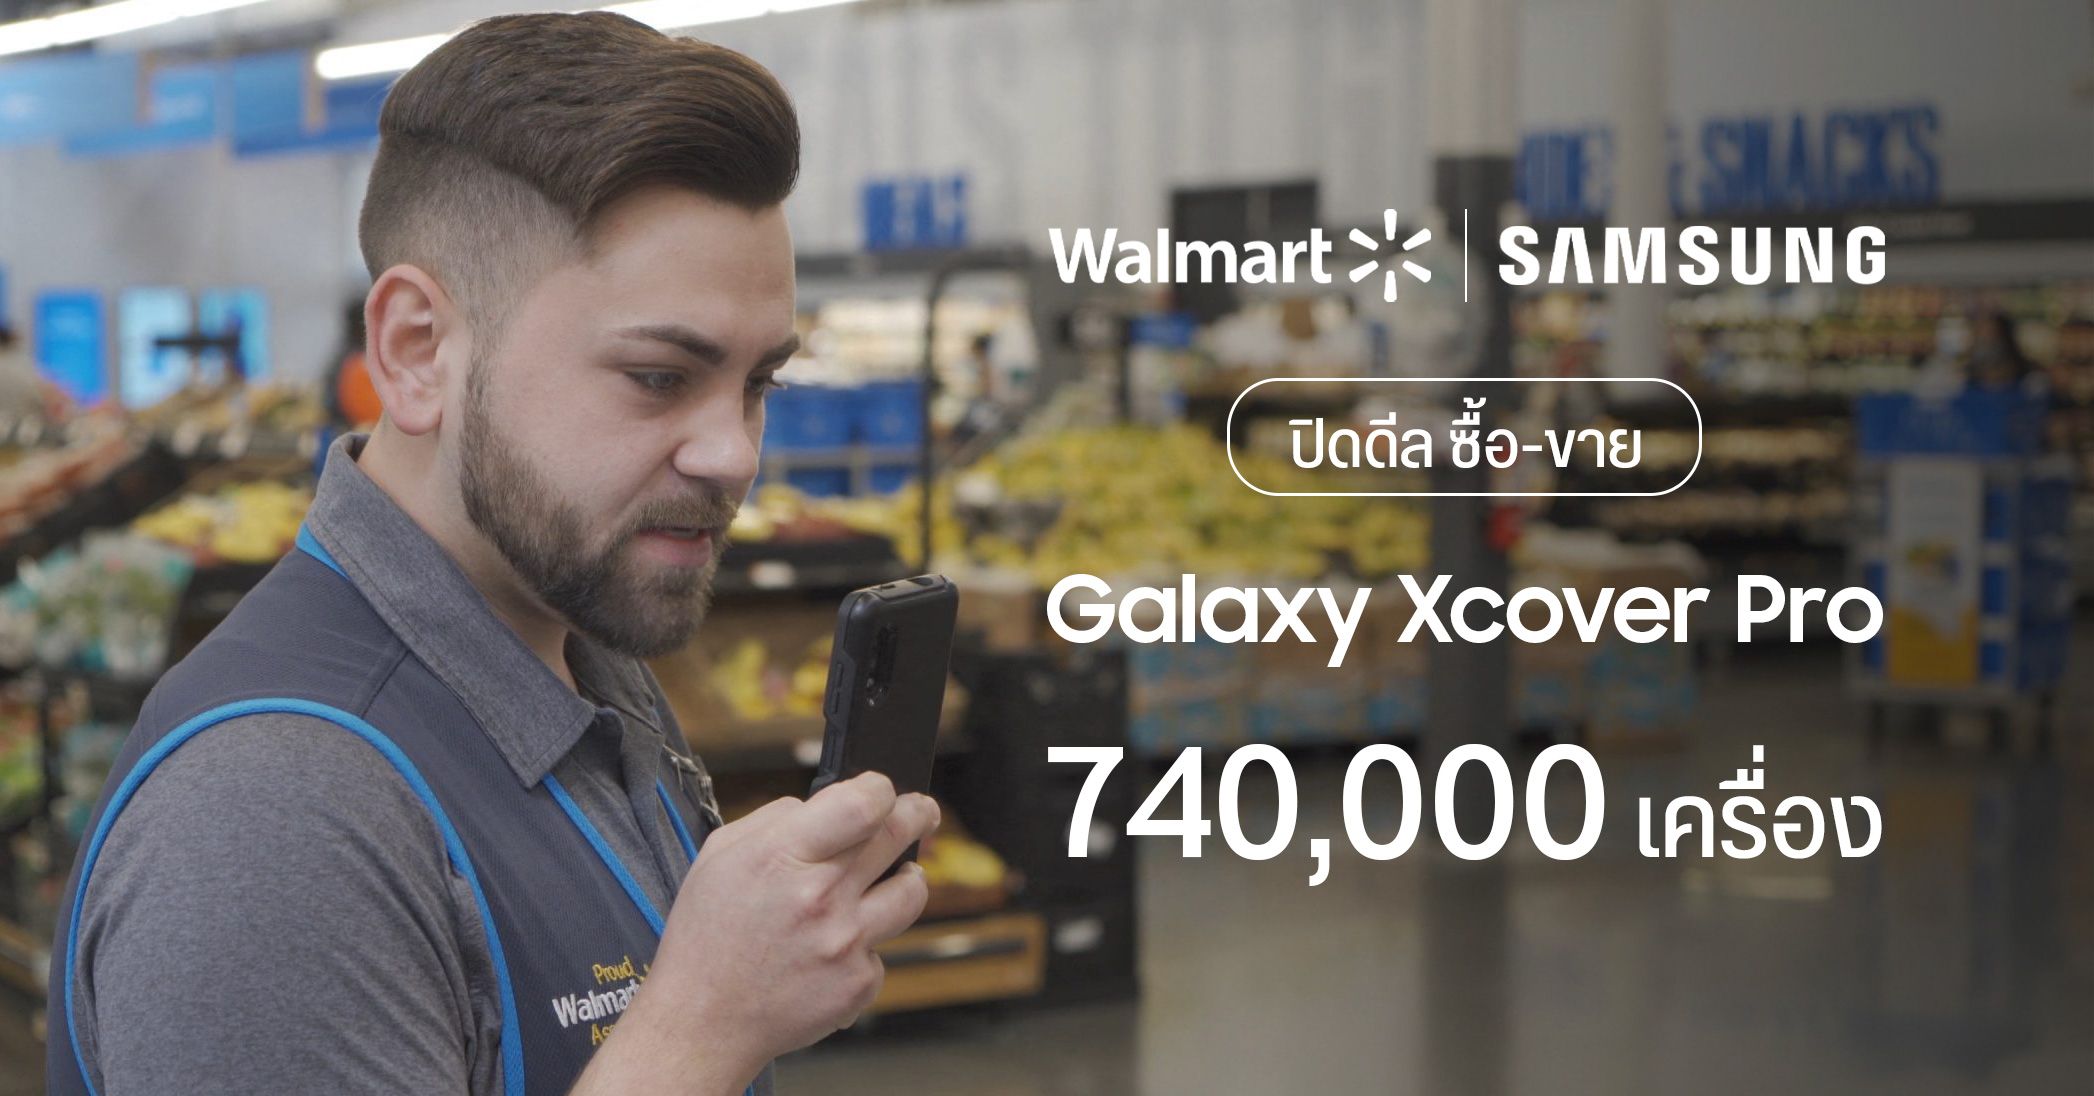 Walmart ซื้อ Galaxy Xcover Pro จำนวน 740,000 เครื่องจาก Samsung ให้พนักงาน กลายเป็นดีลระดับองค์กรที่ใหญ่สุดในสหรัฐฯ